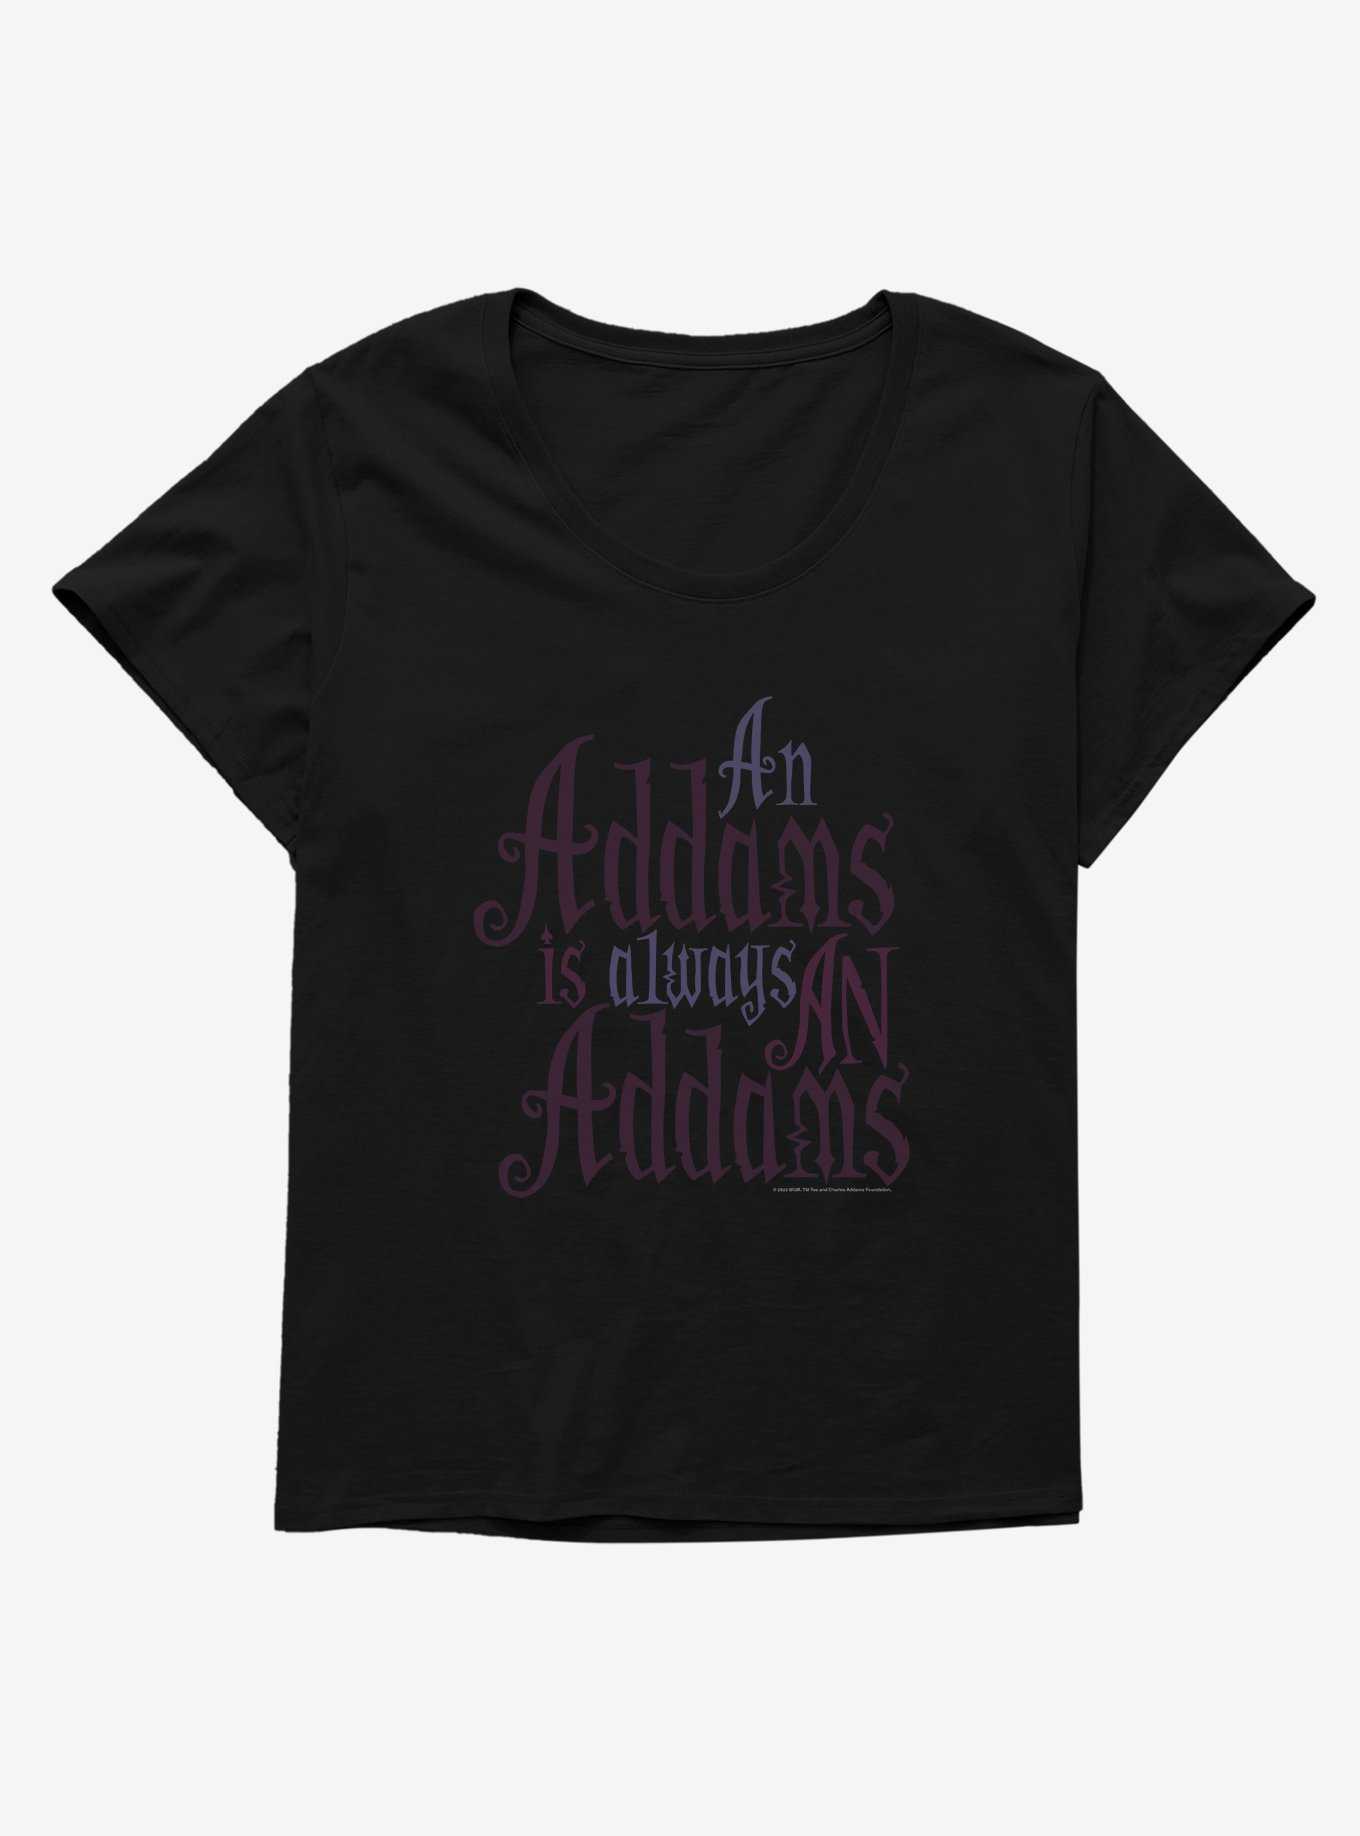 Addams Family Always An Addams Girls T-Shirt Plus Size, , hi-res